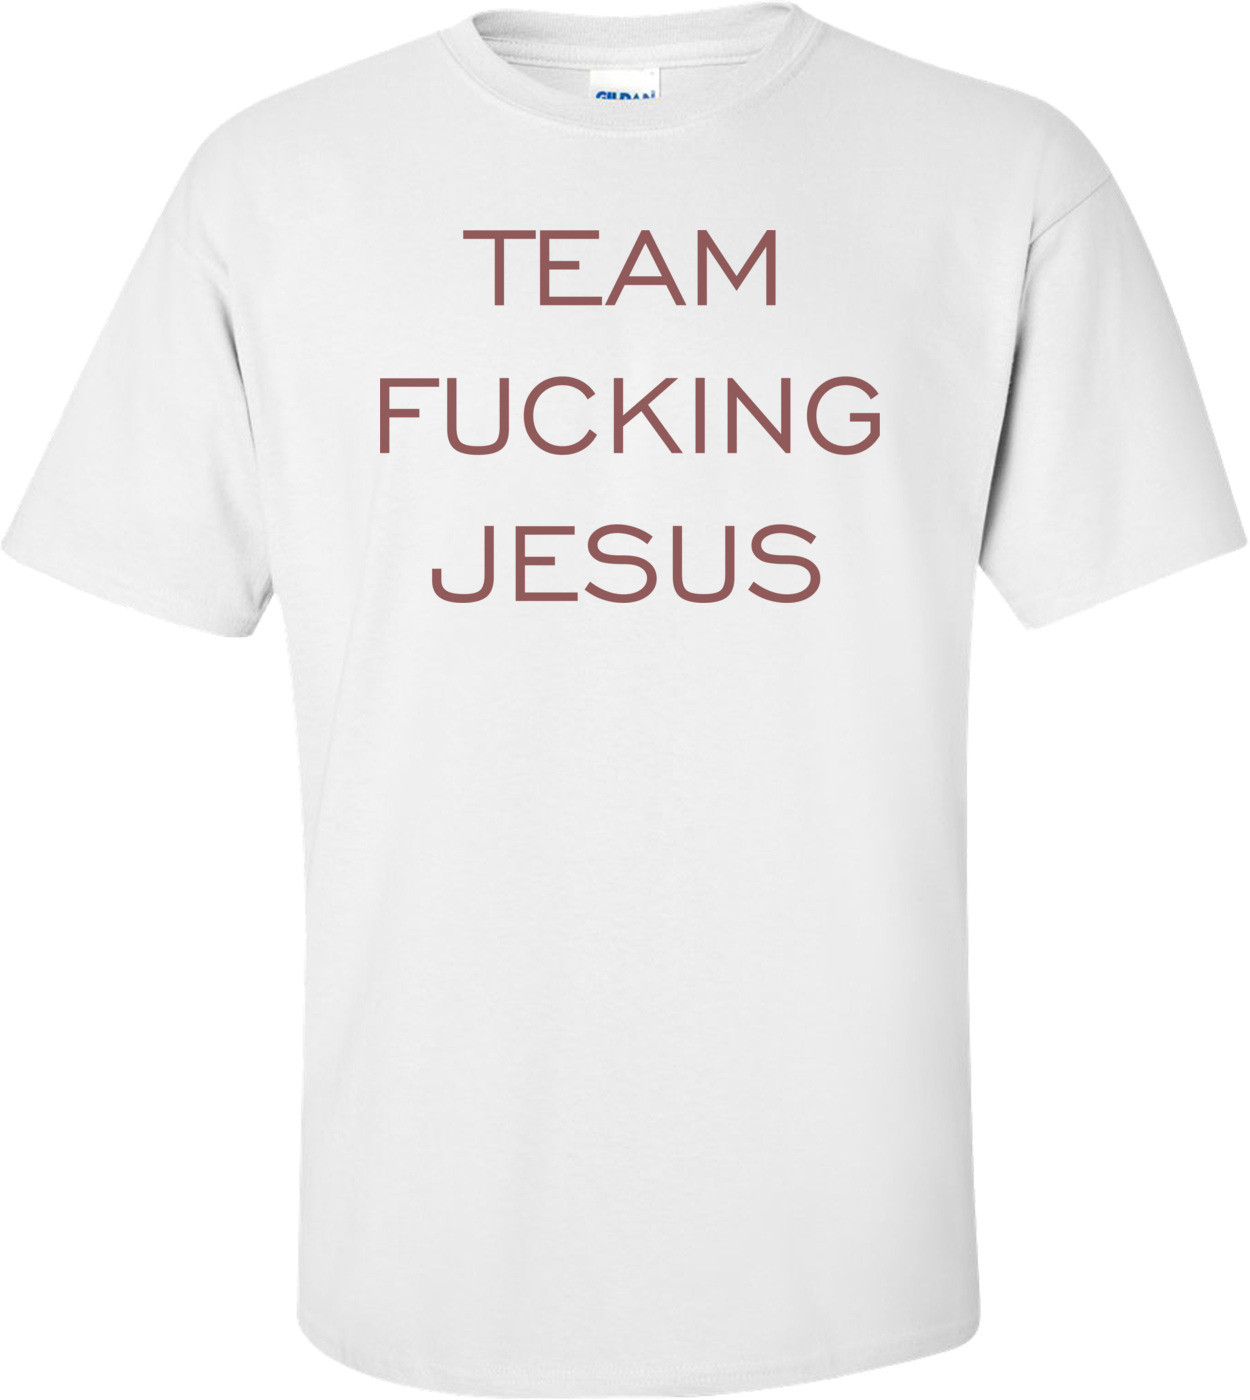 TEAM FUCKING JESUS Shirt